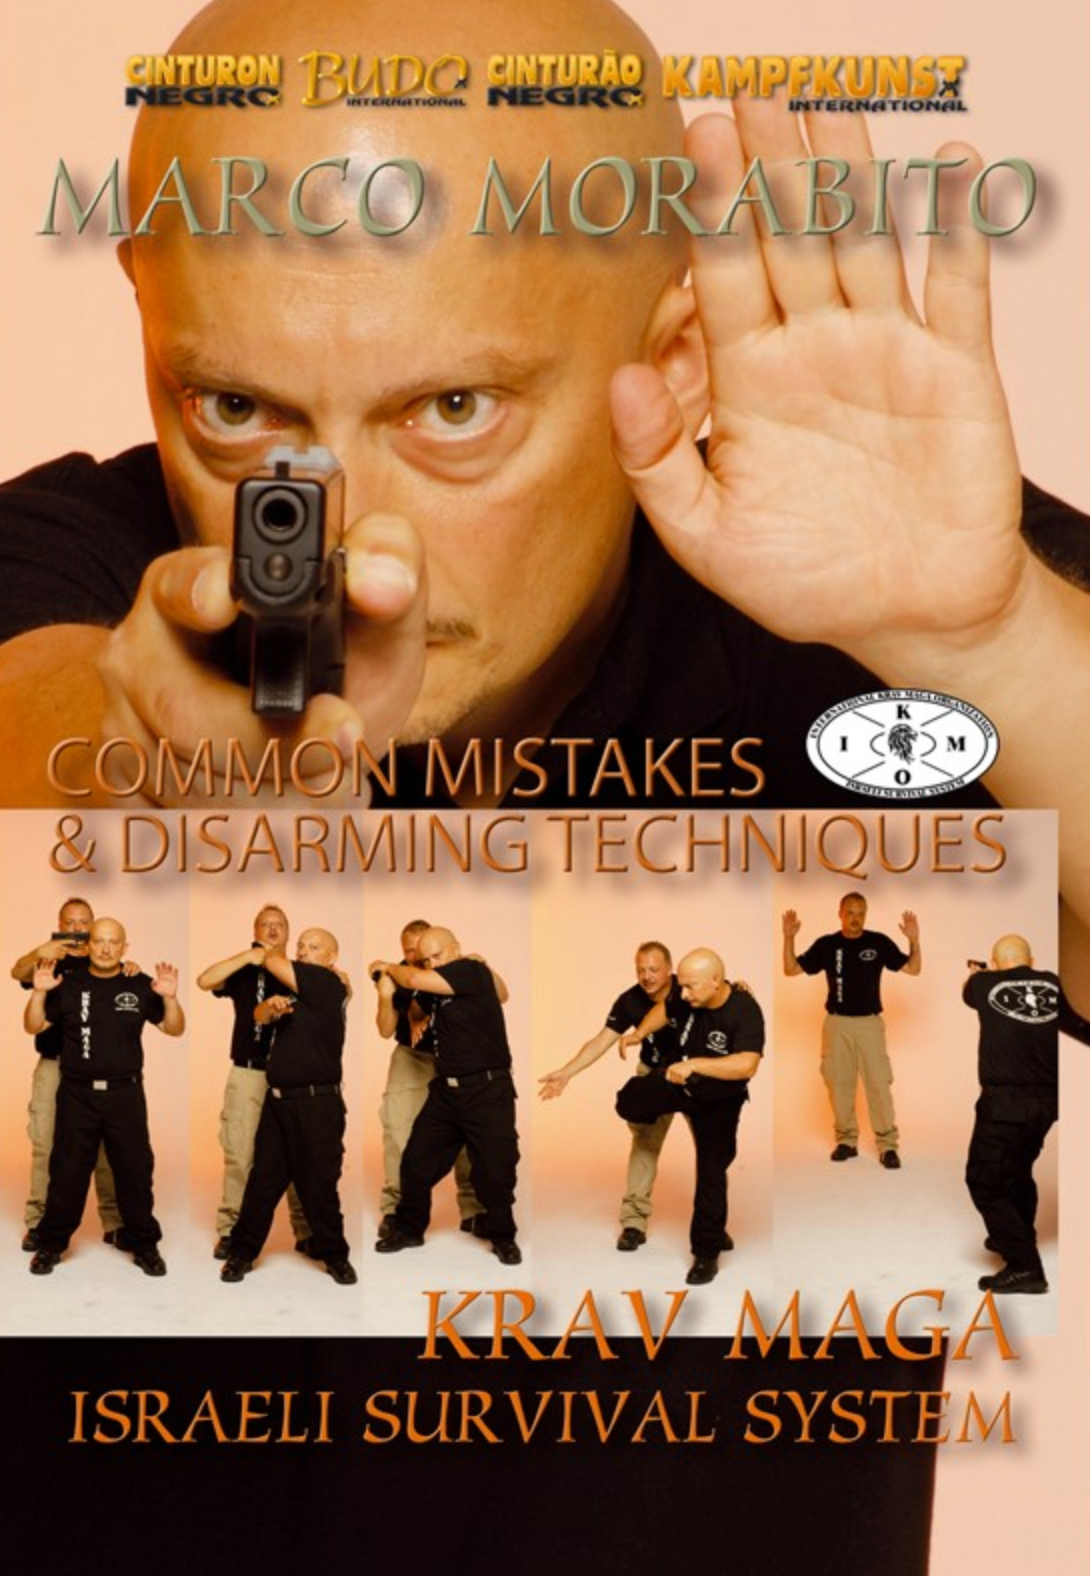 Krav Maga Israeli Survival System Disarming Techniques DVD with Marco Morabito - Budovideos Inc